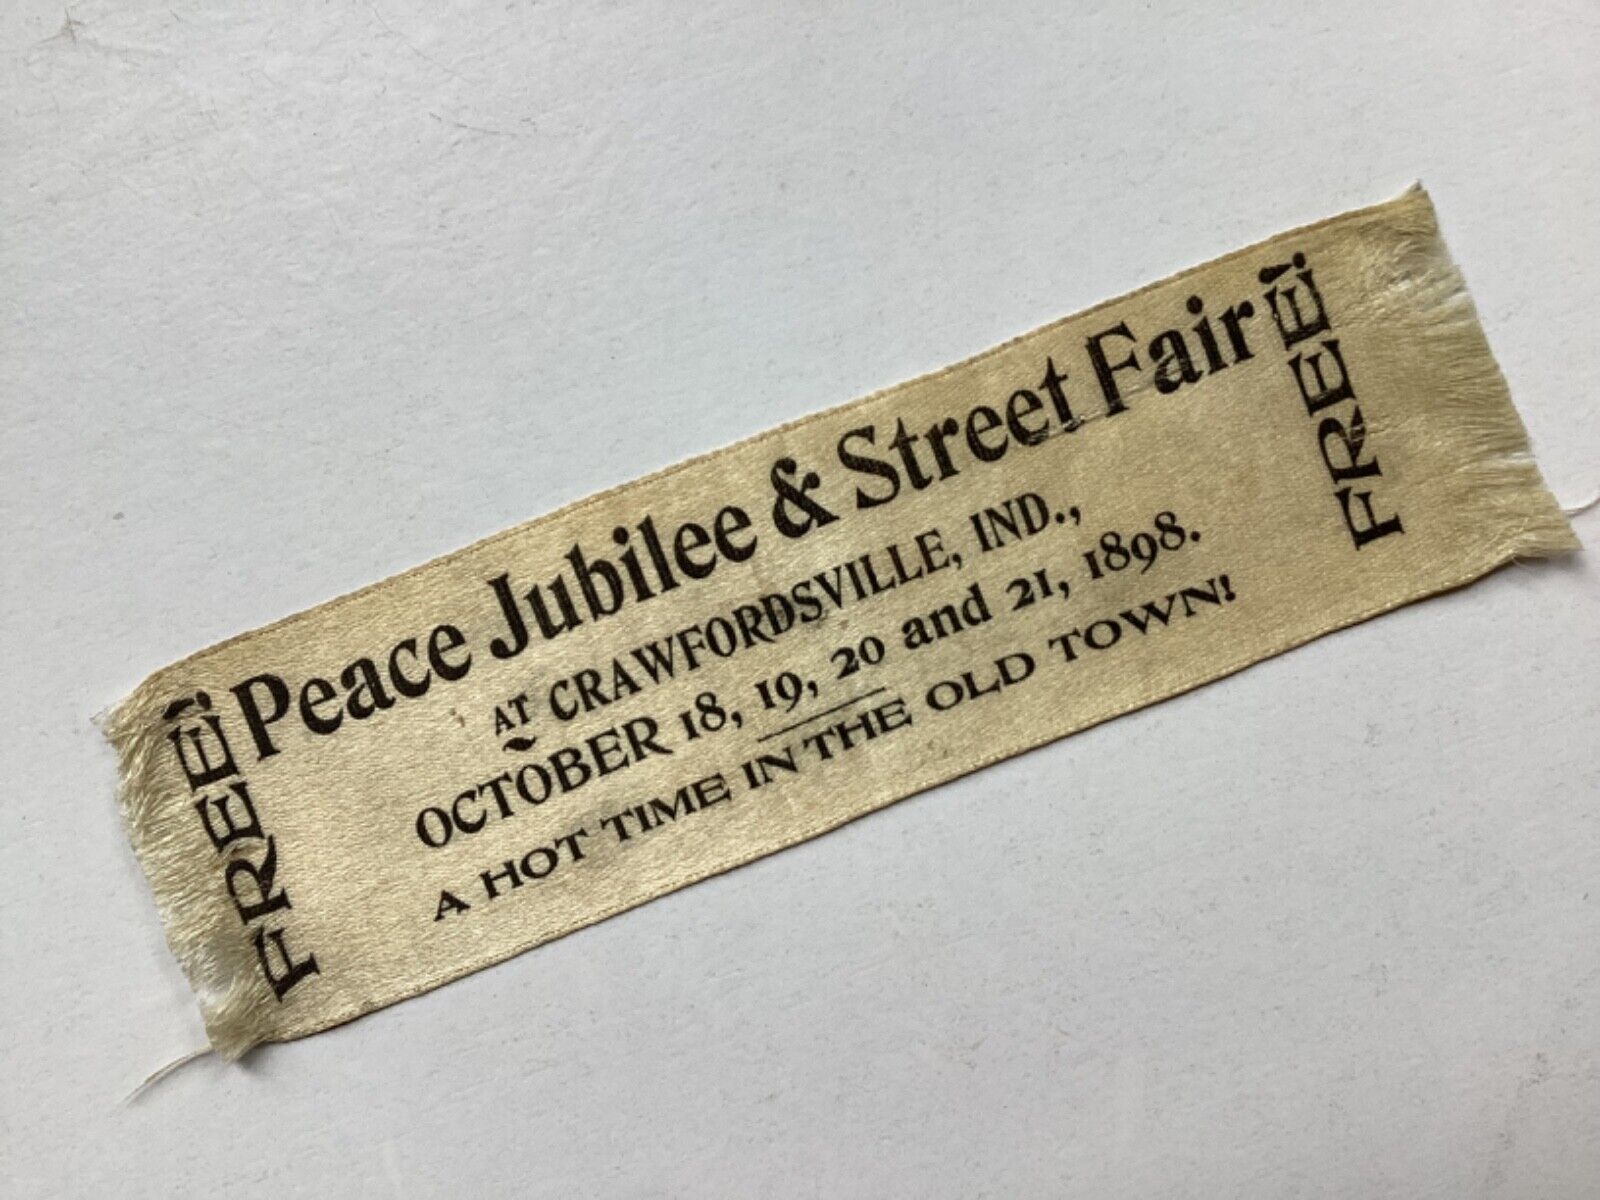 1898 Spanish American War “PEACE JUBILEE & Street Fair” Ribbon Crawfordsville IN